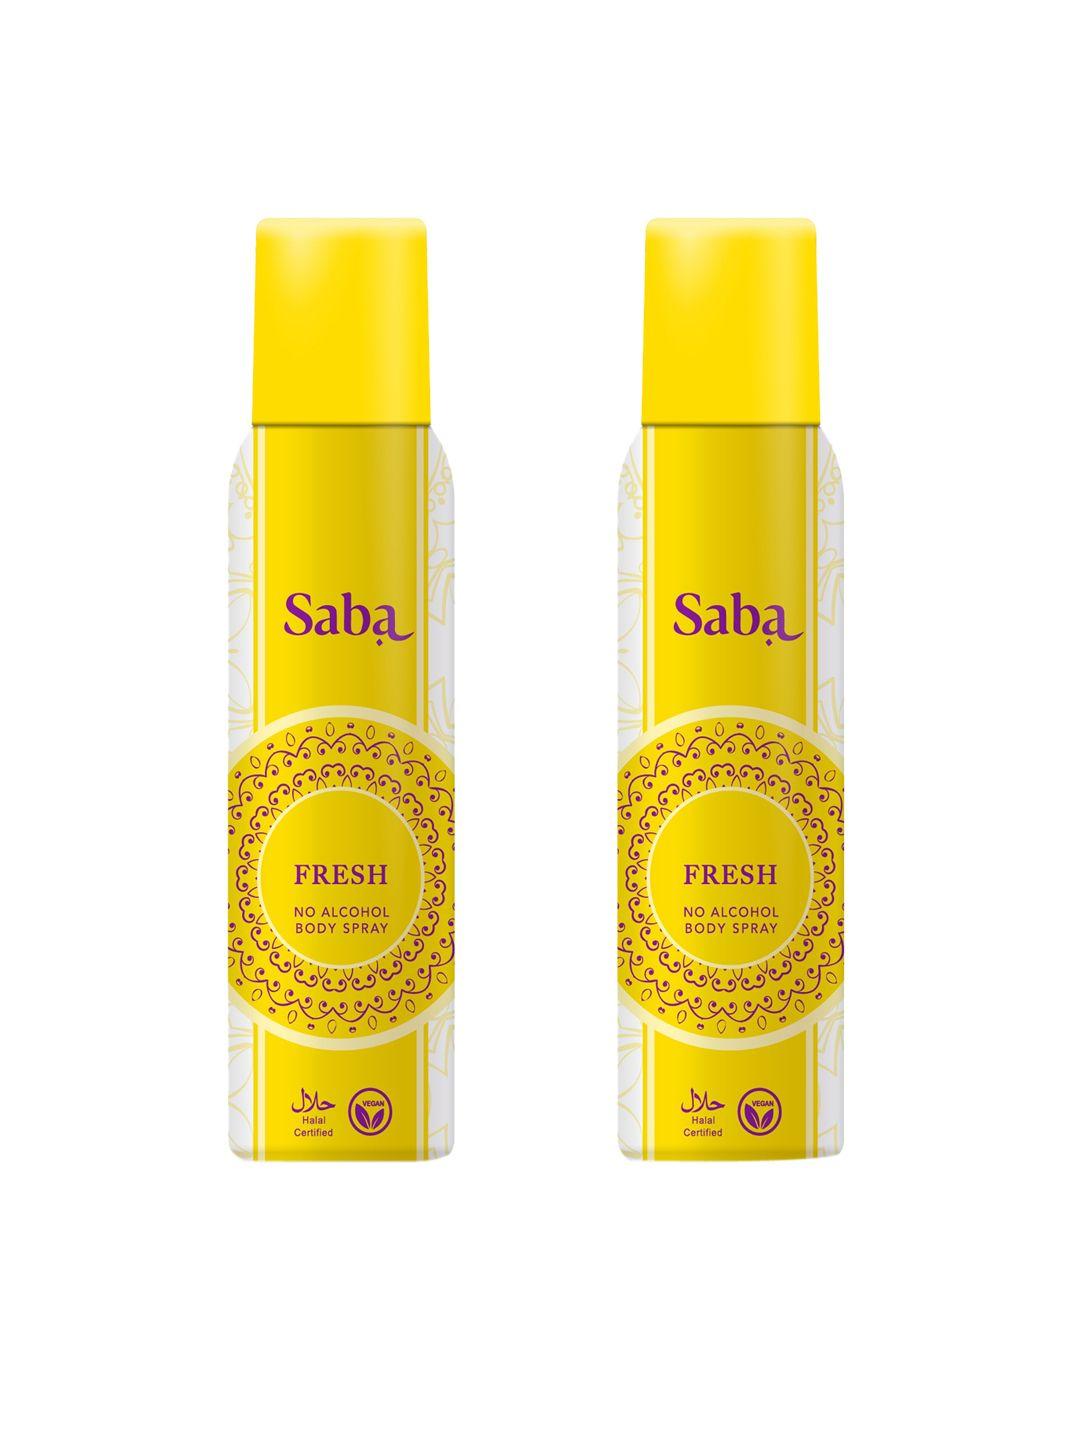 saba women set of 2 vegan fresh no alcohol deodorant body spray - 150 ml each